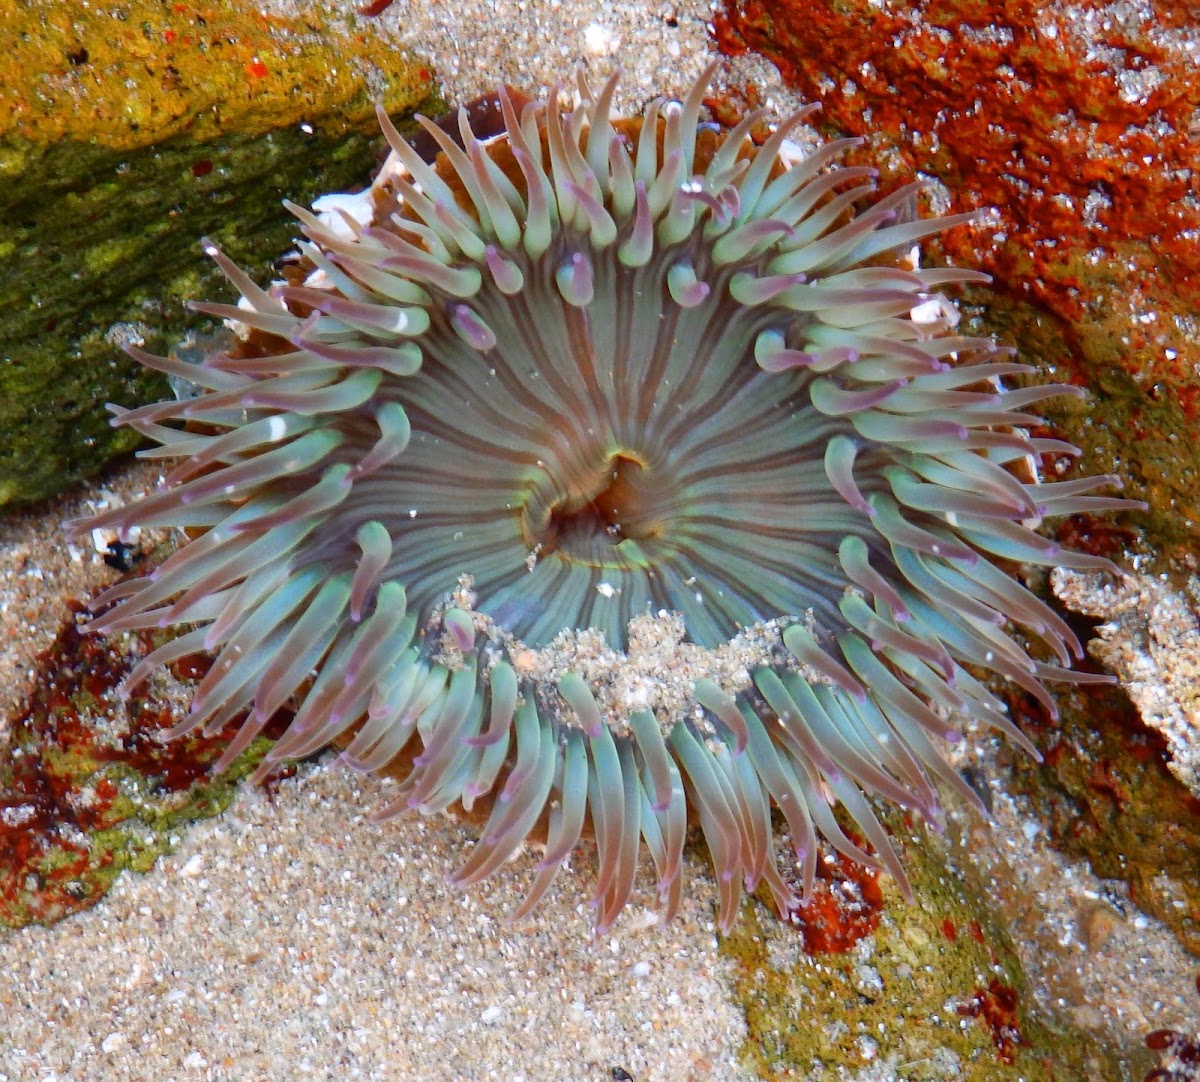 Starbust anemone